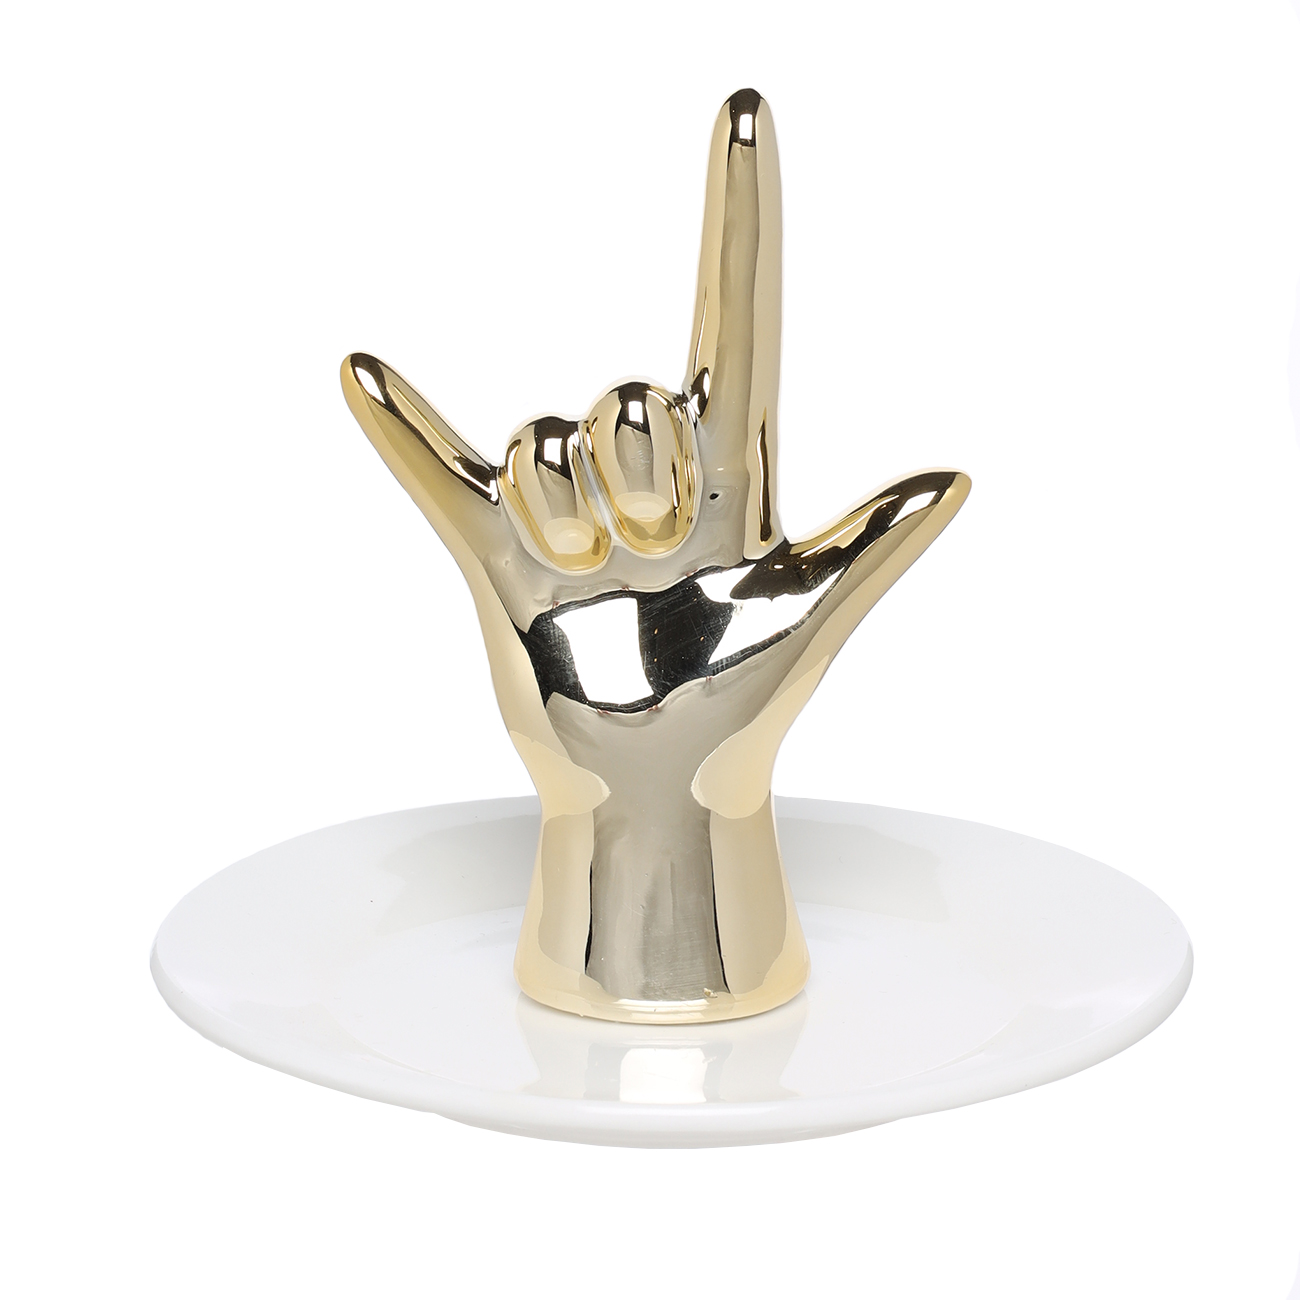 Jewelry holder, 11 cm, ceramic / metal, white and gold, Hand, Fantastic gold изображение № 2